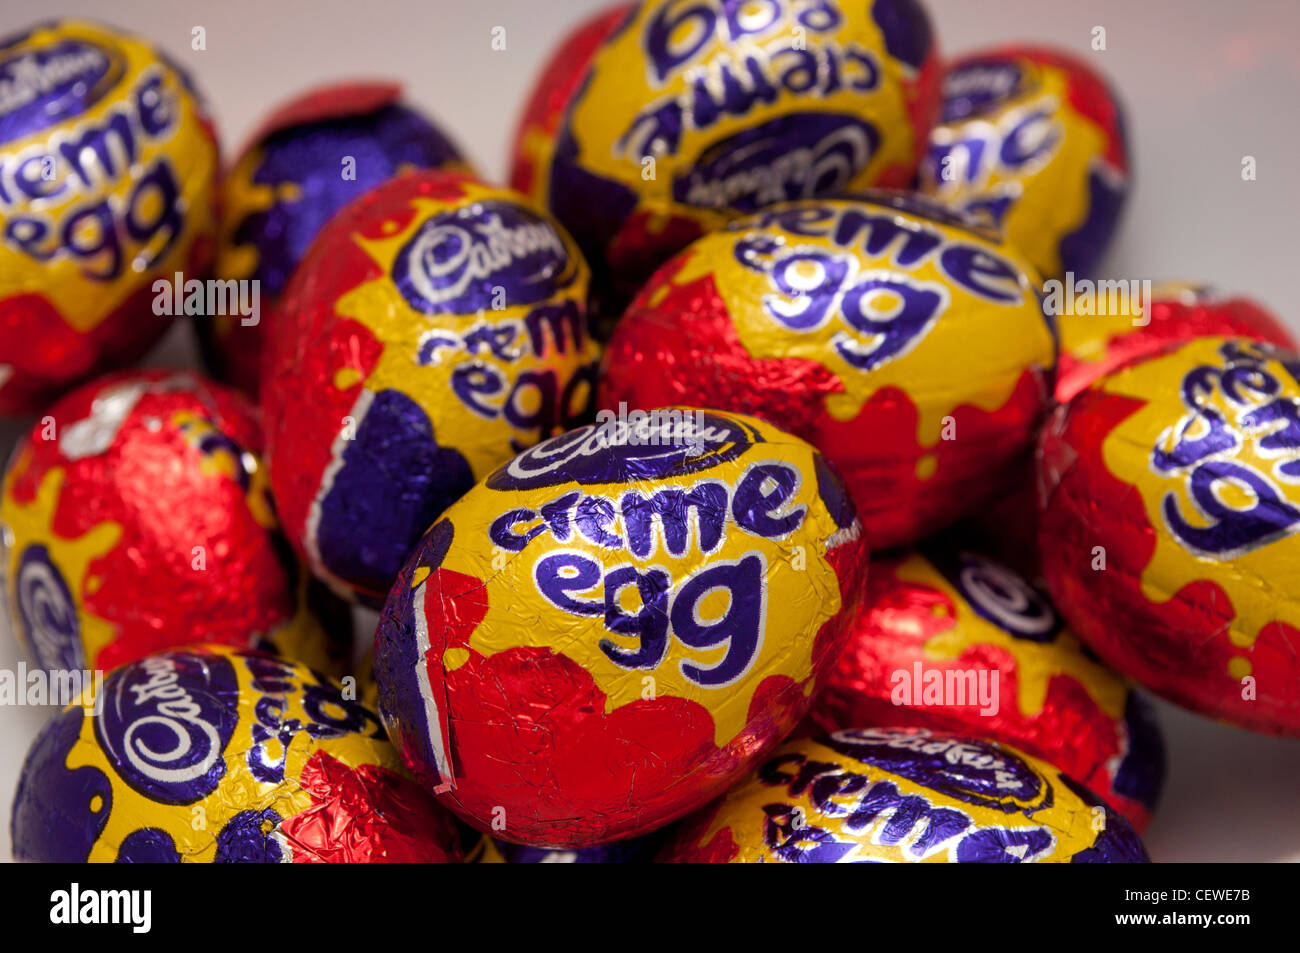 Bowl of Cadbury's creme egg minis Stock Photo